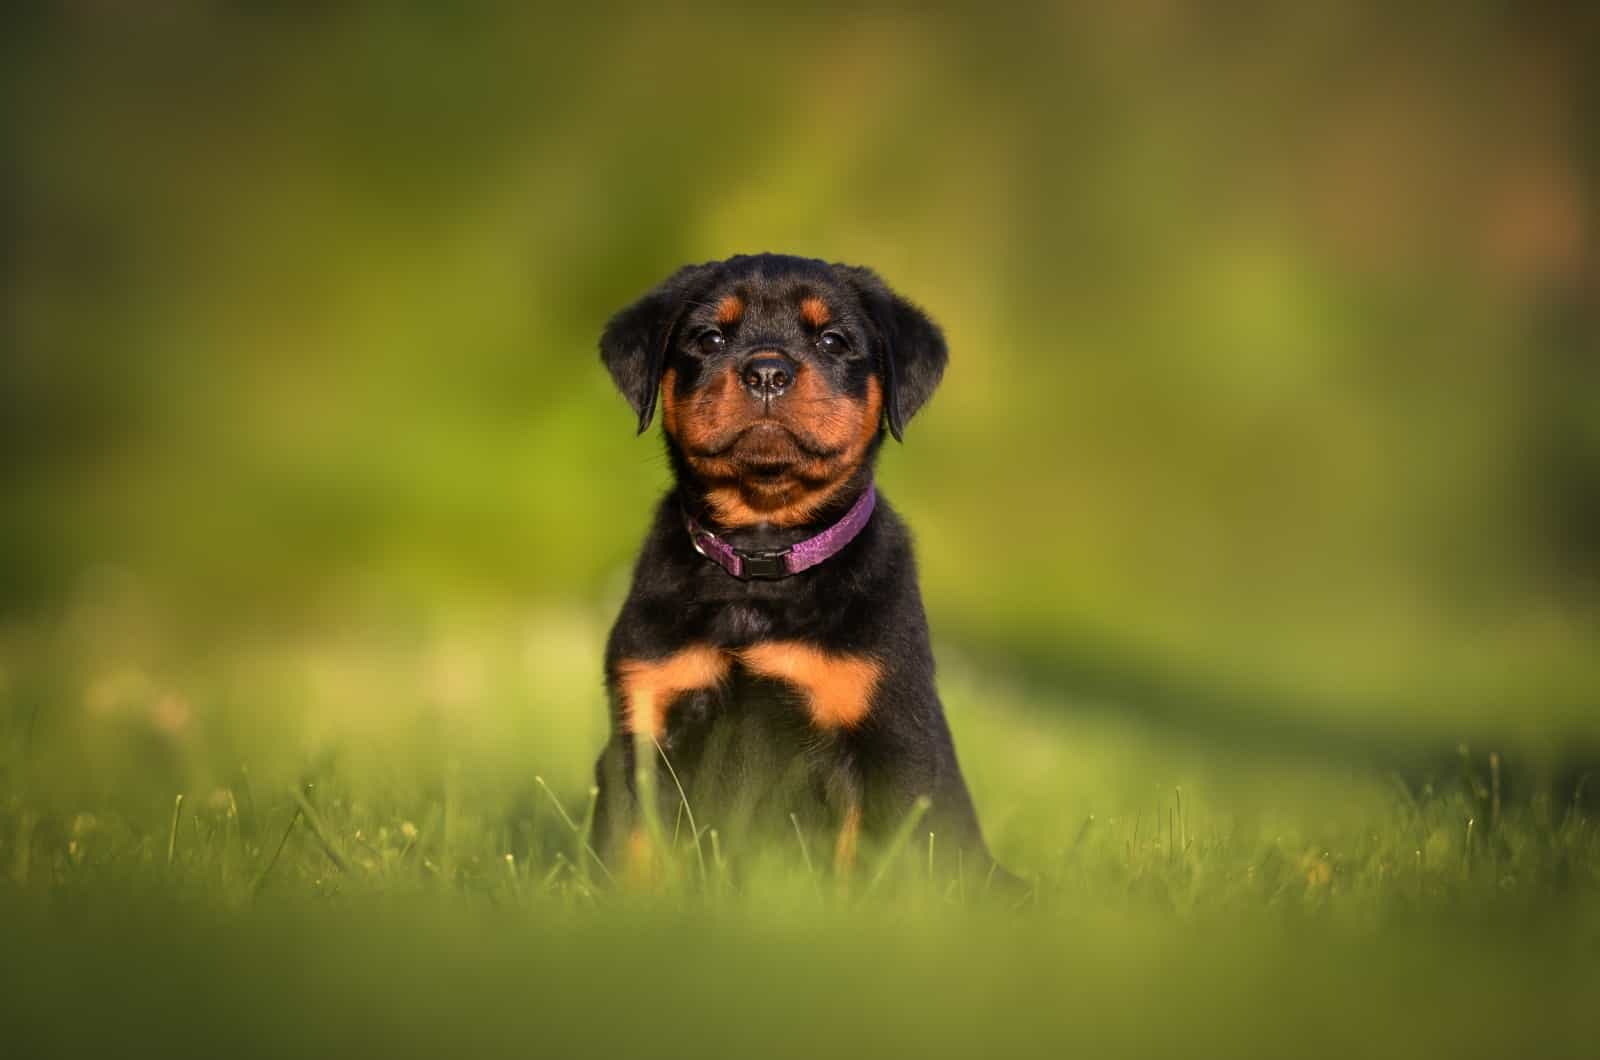 Rottweiler puppy with collar